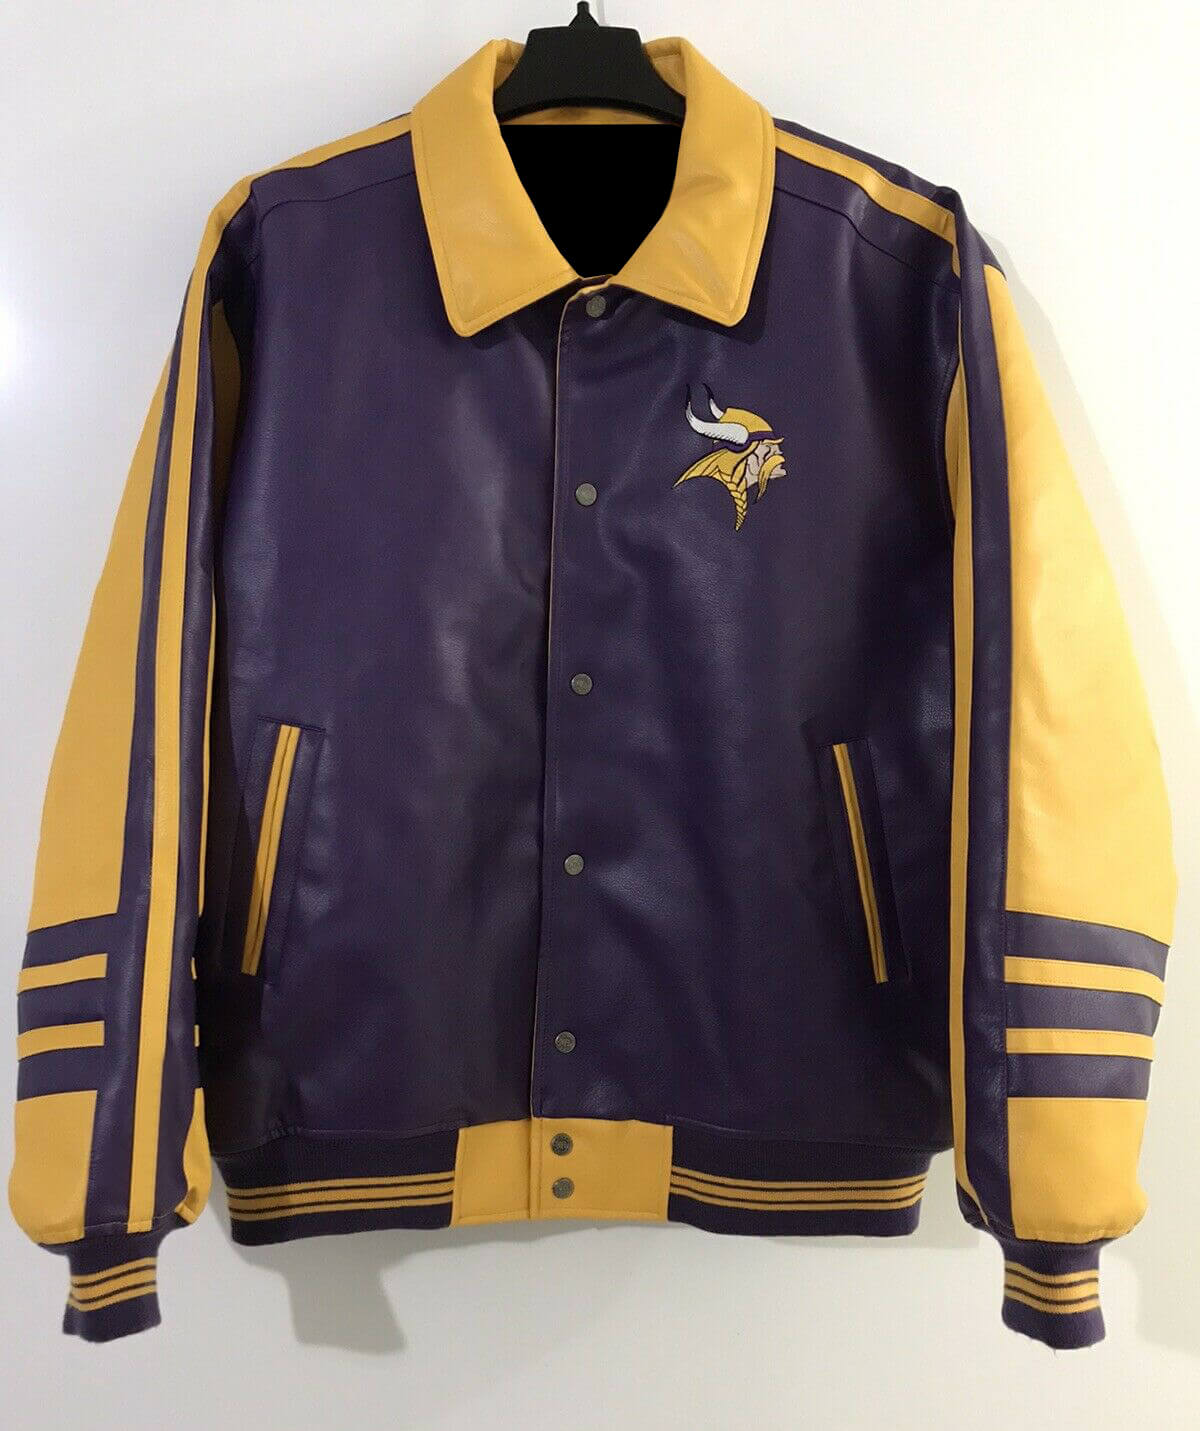 Maker of Jacket Fashion Jackets Vintage Minnesota Vikings NFL Suede Leather